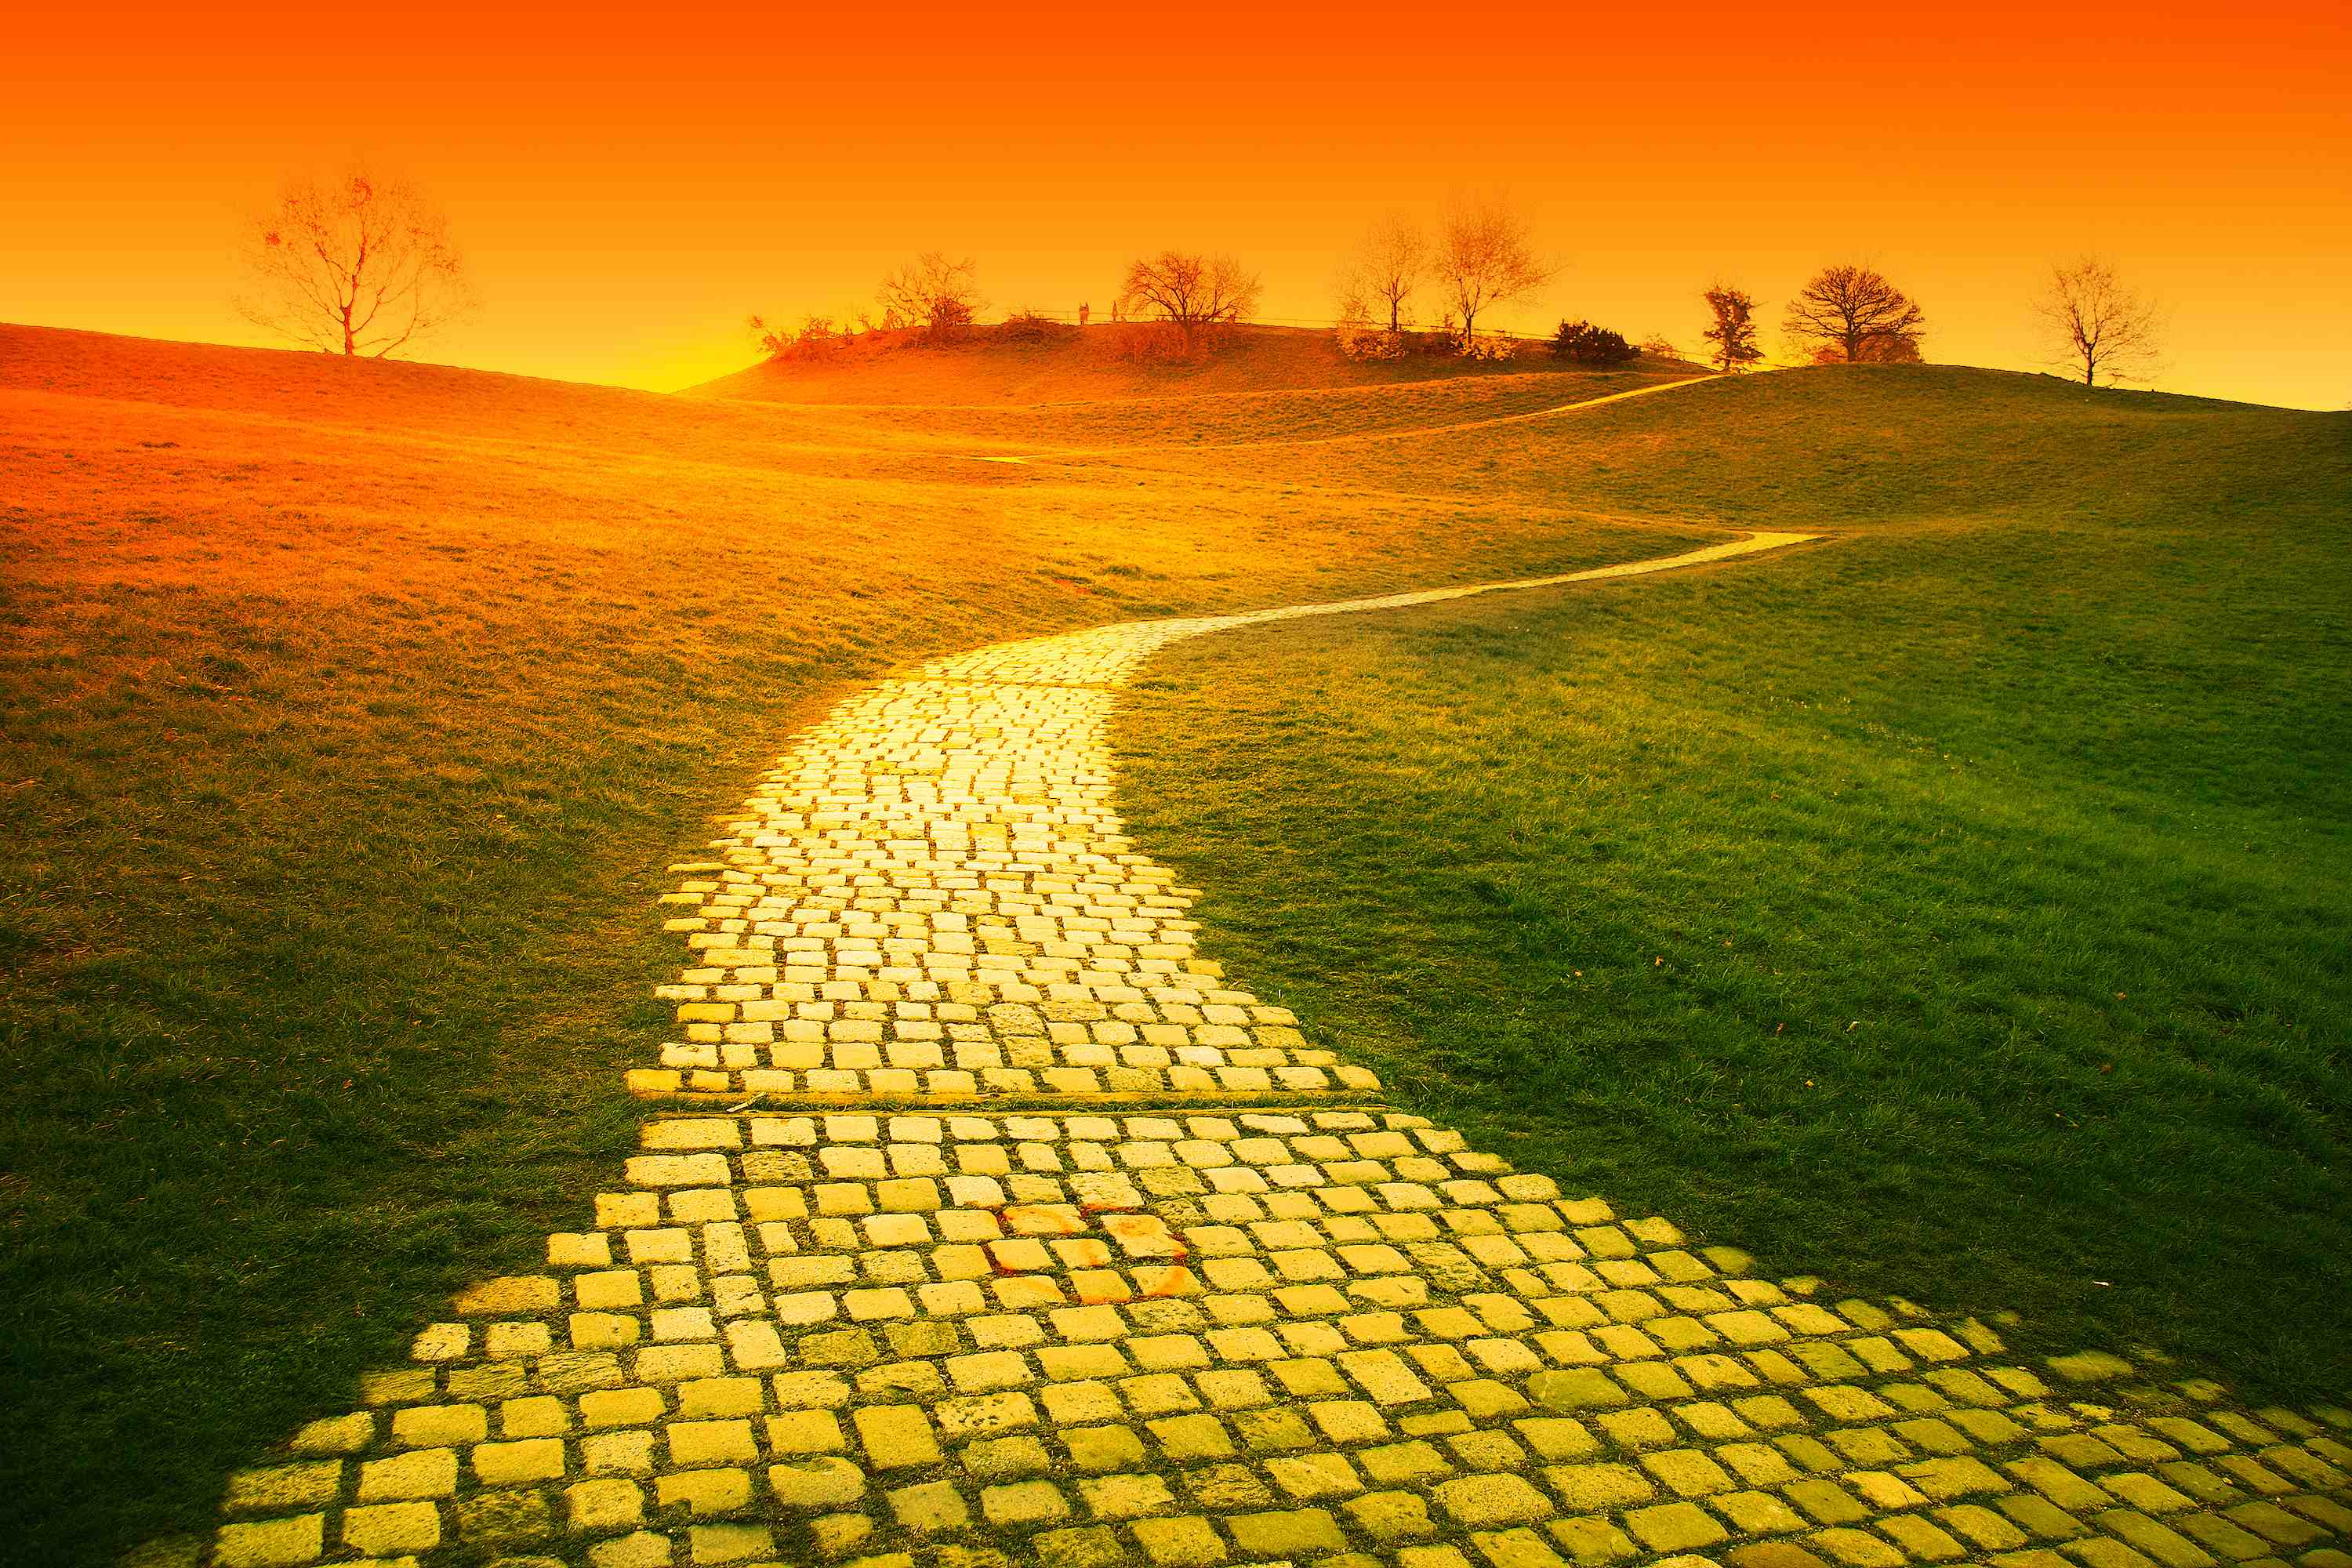 The Yellow Brick Road